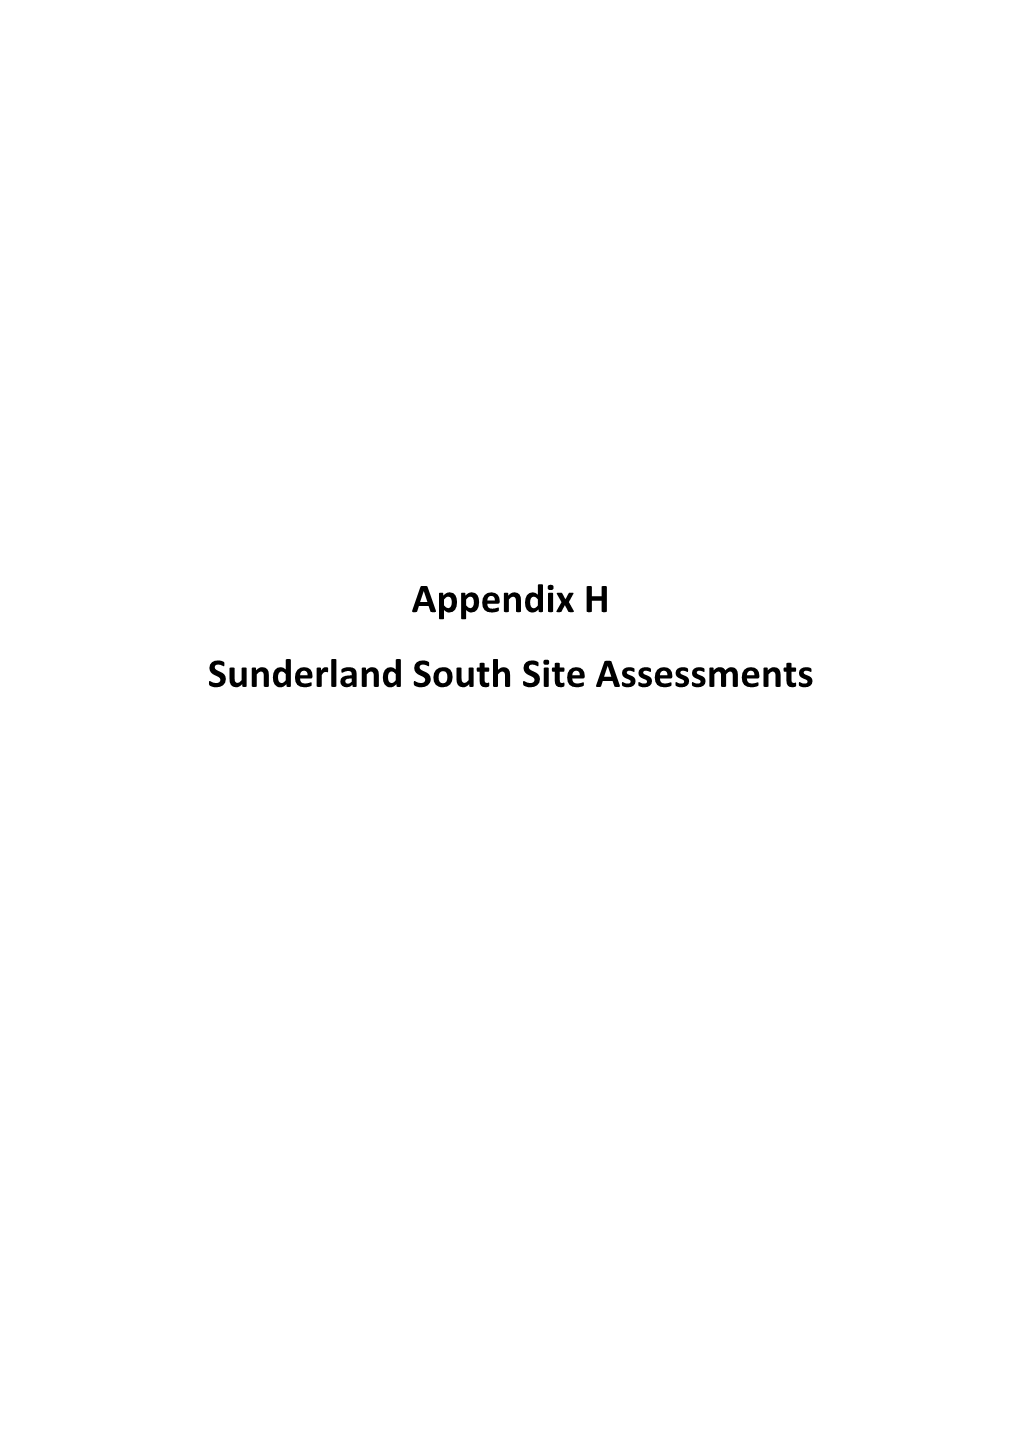 Appendix H Sunderland South Site Assessments List of SHLAA Sites (Sunderland South)